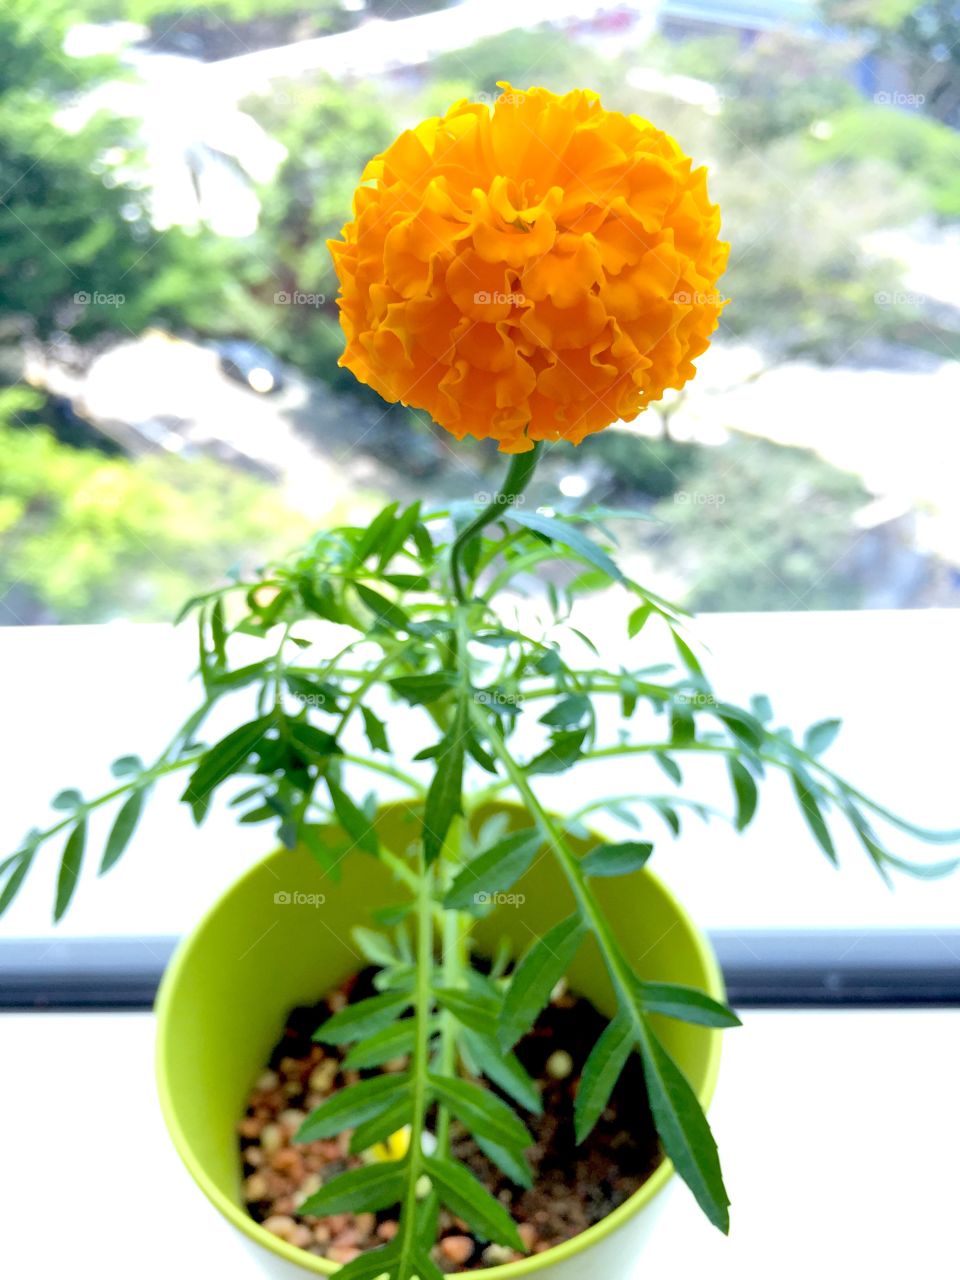 Orange Marigold Flower. A single orange marigold flower in a pot, by the window.